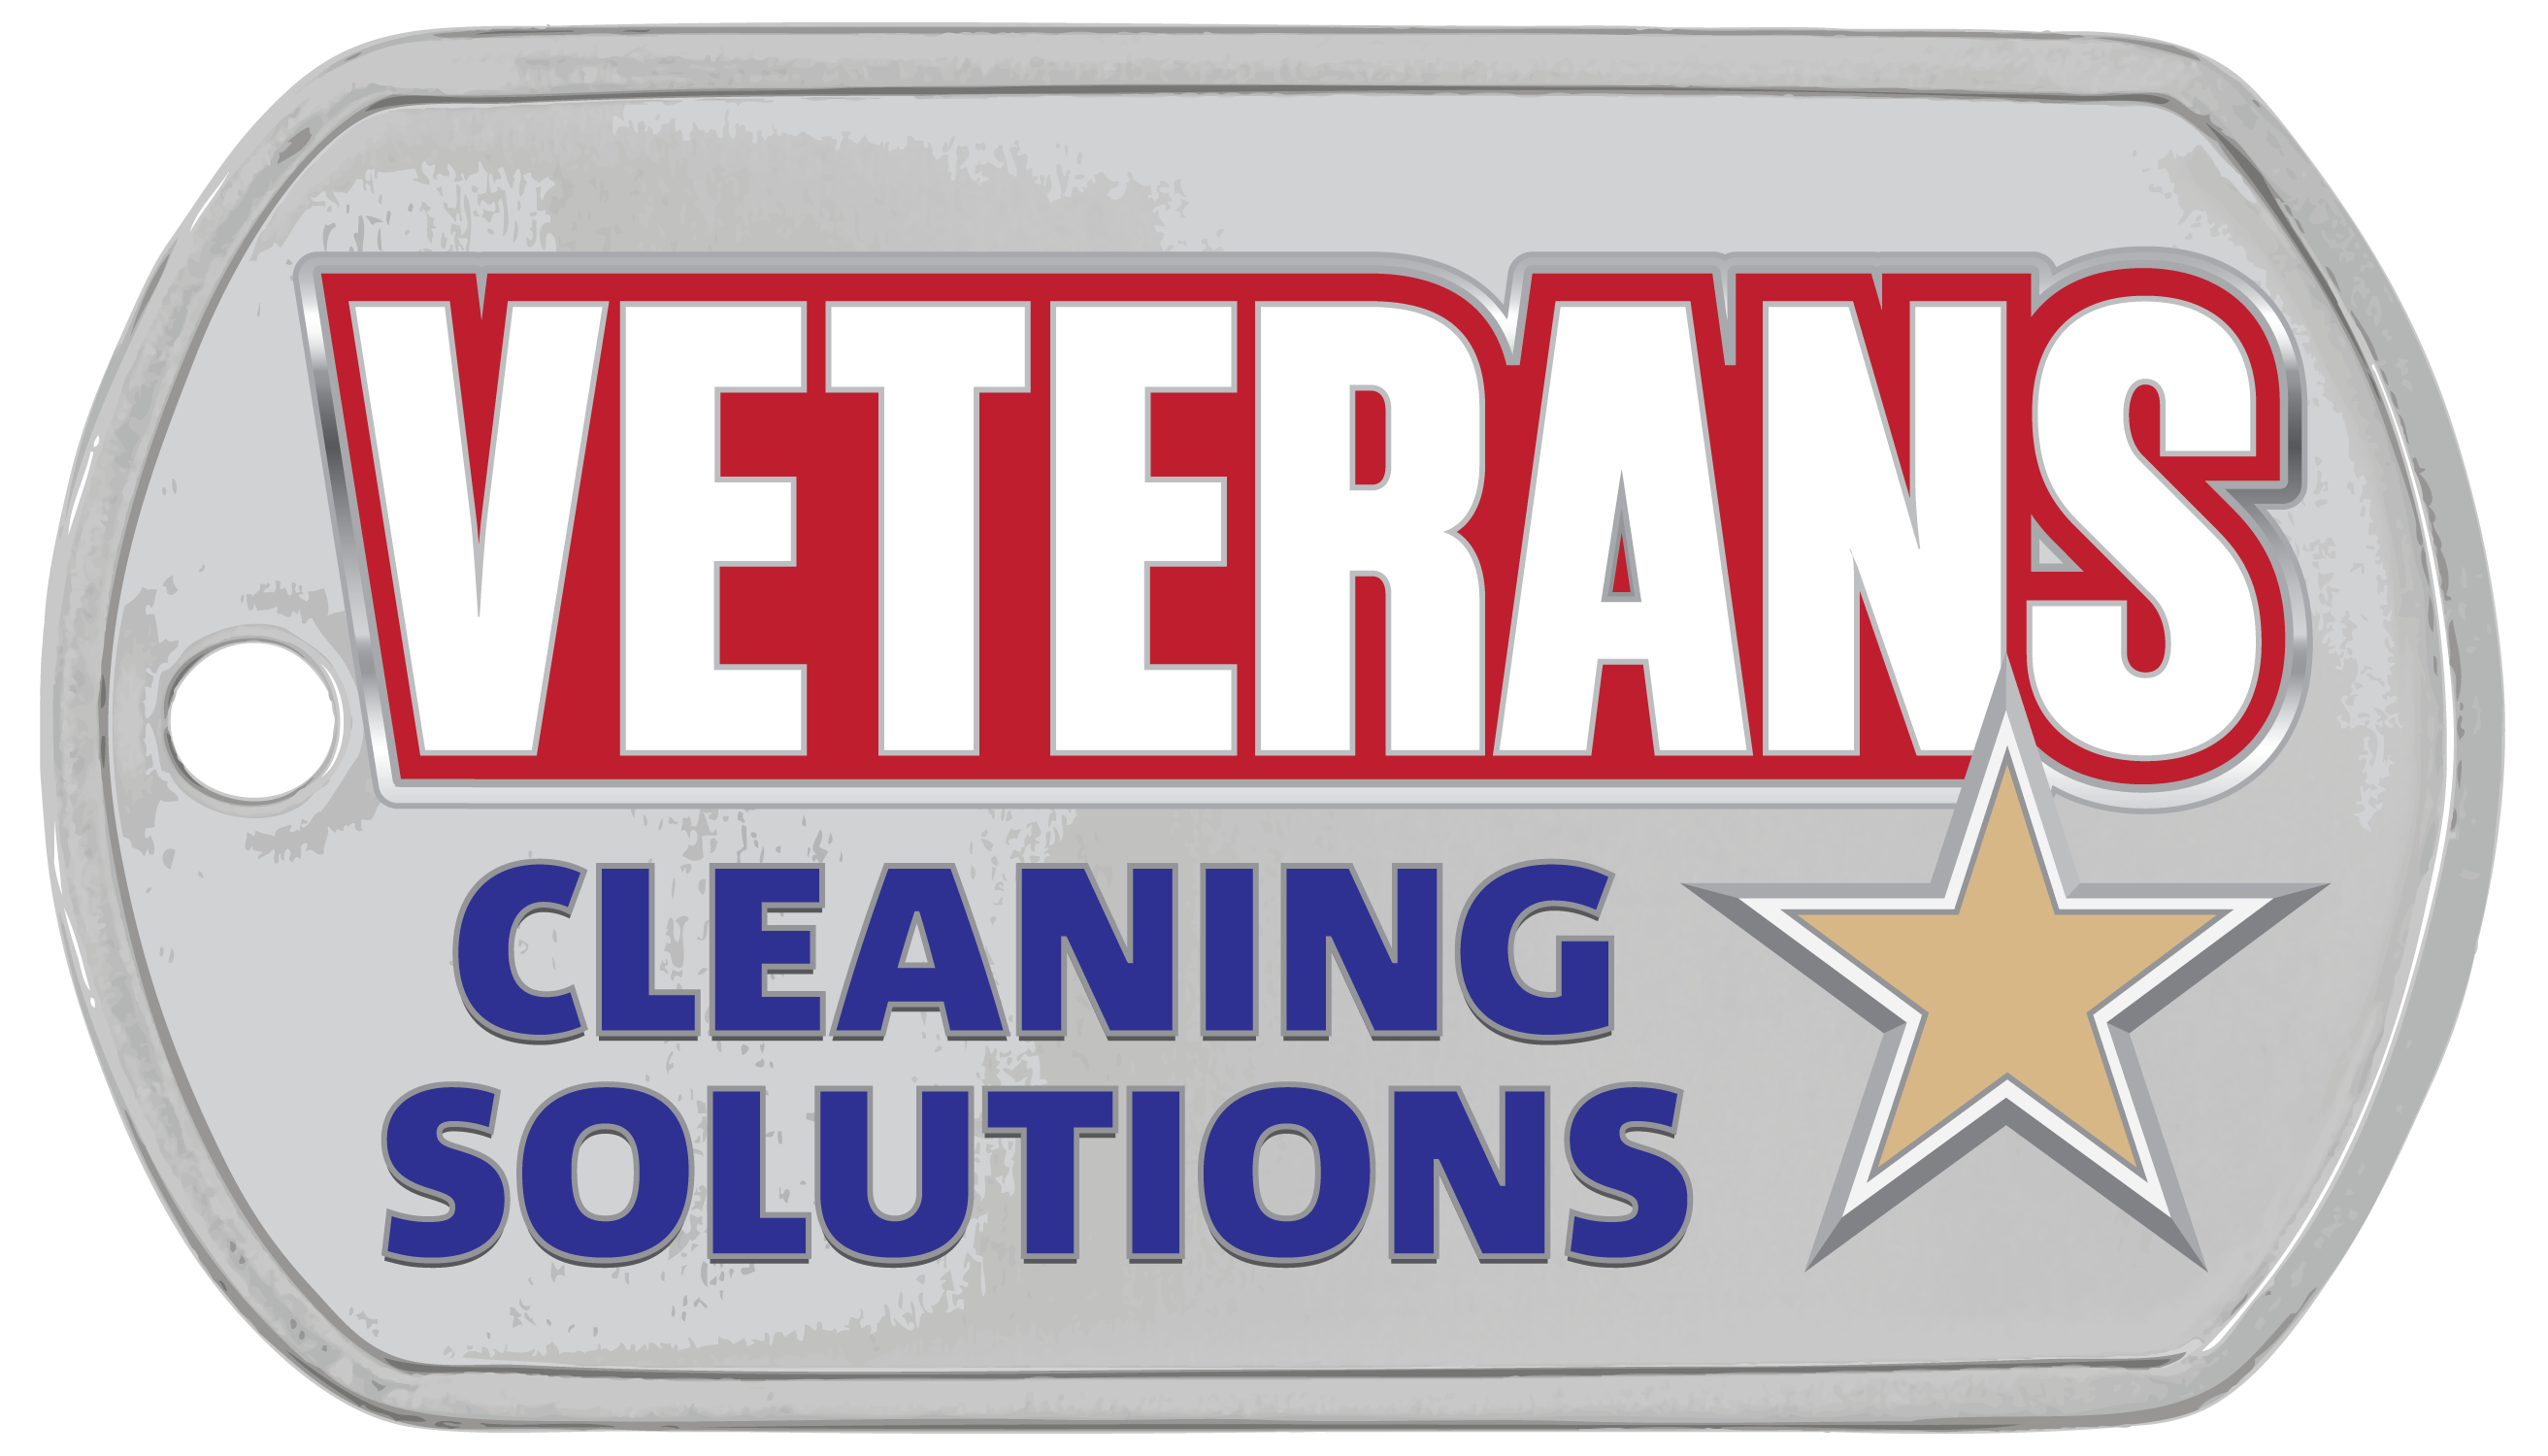 VETERANS Cleaning Solutions, LLC